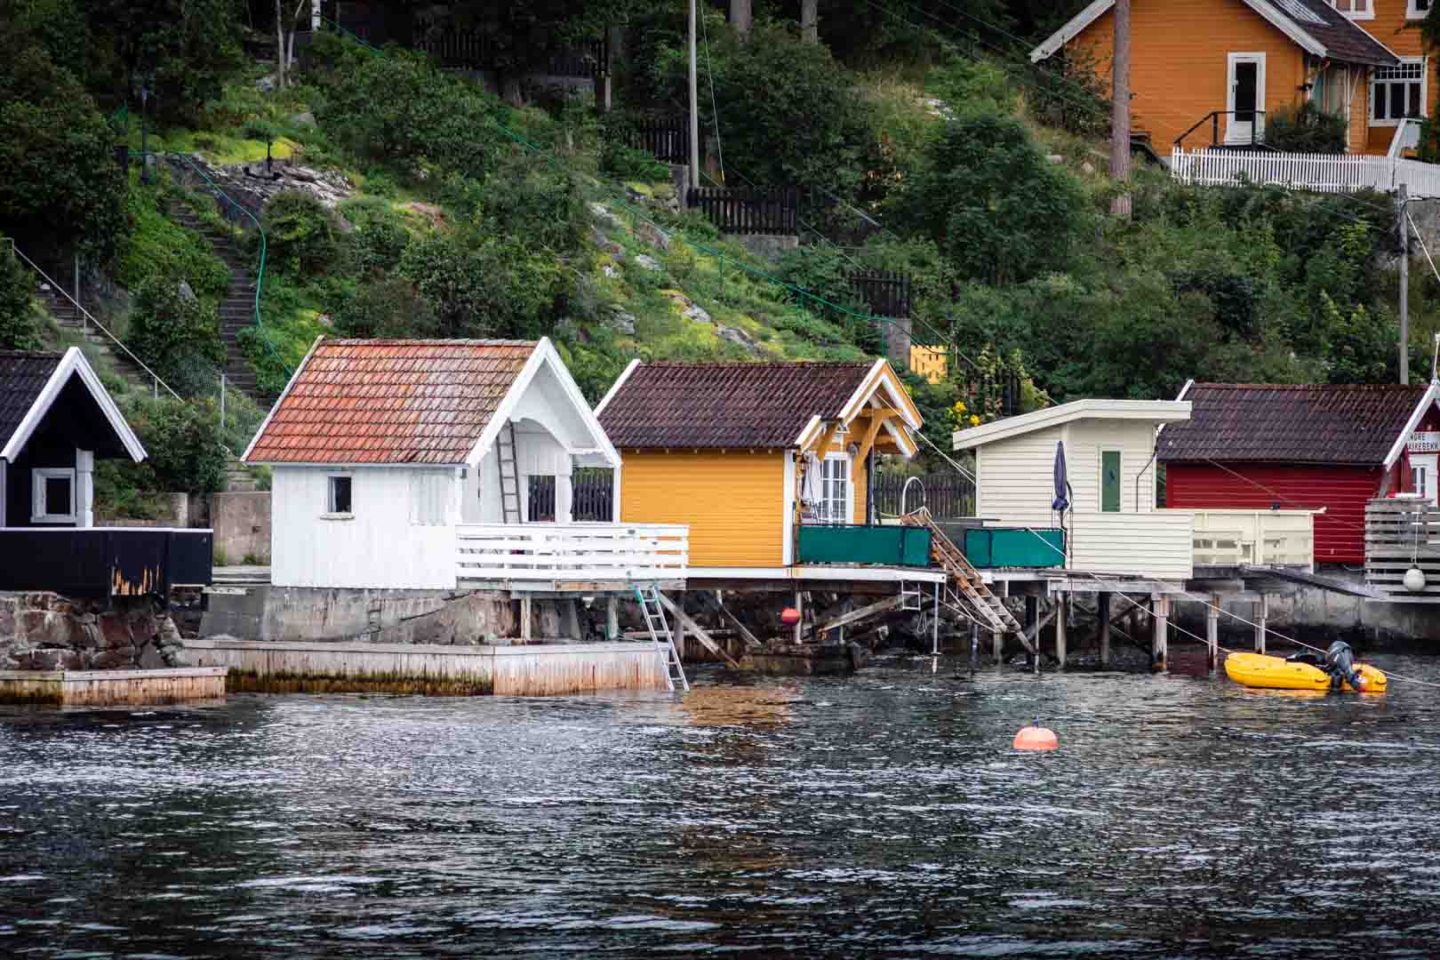 Oslo Fjord docks